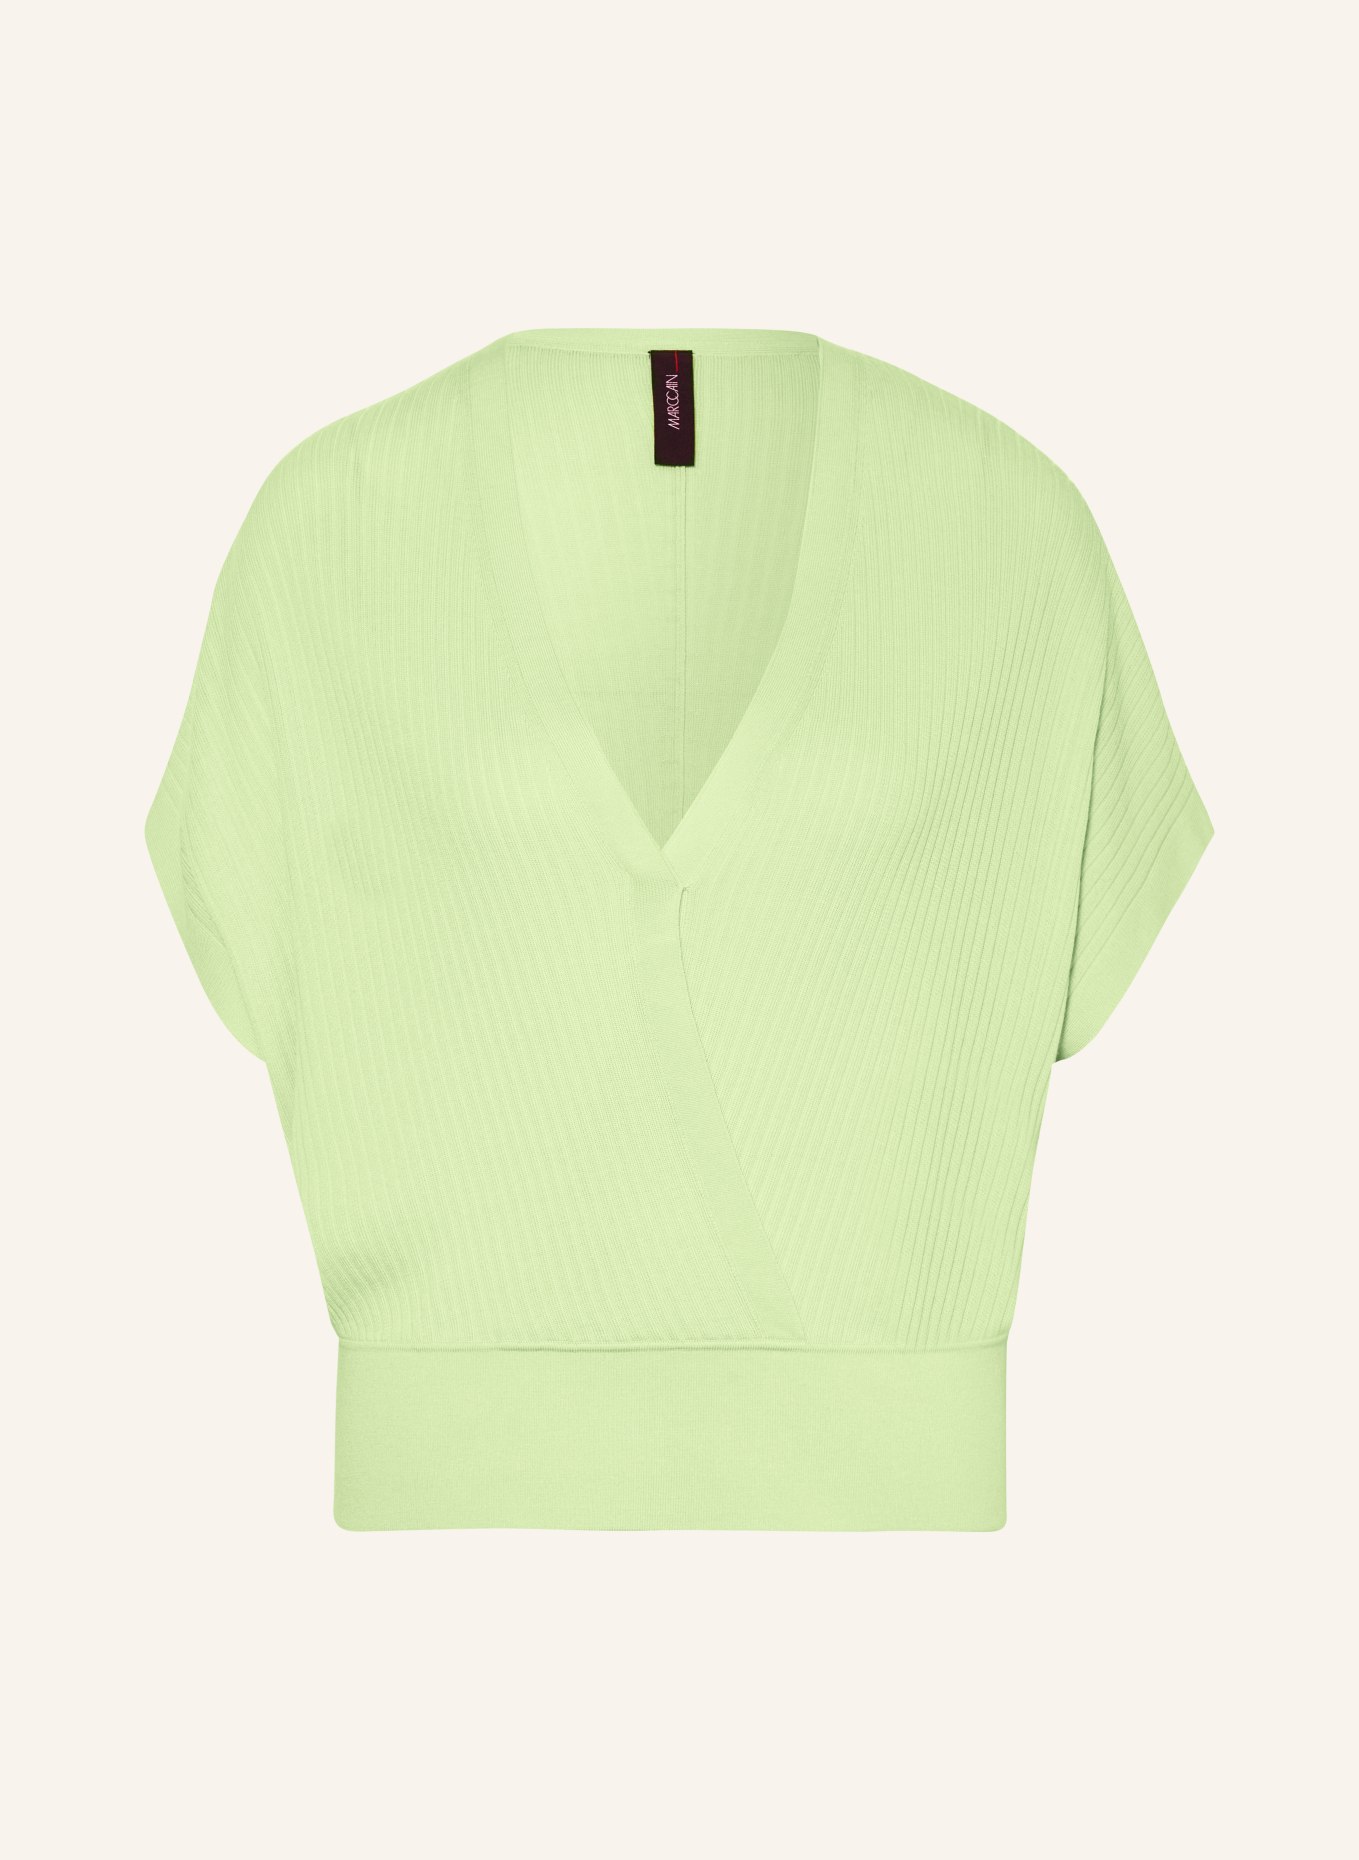 MARC CAIN Strickshirt, Farbe: 531 light apple green (Bild 1)